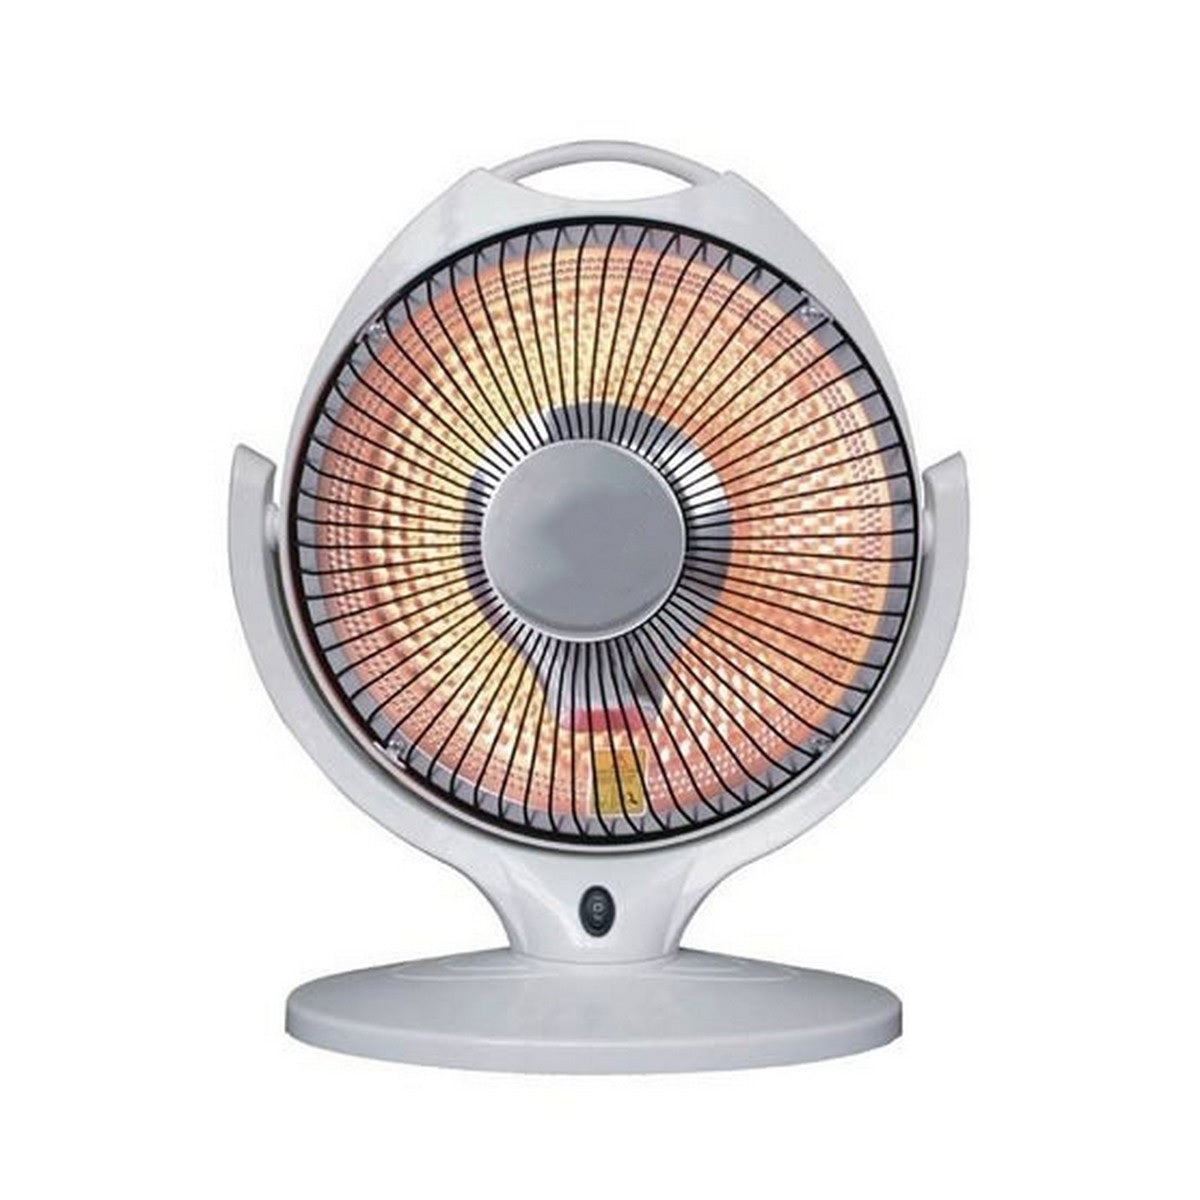 Sanyo Electrical Heater Latest Technology Electrical Heater Fan